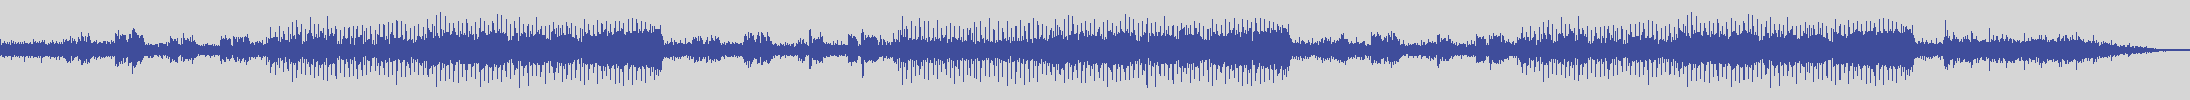 digiphonic_records [DPR013] Little Tony - Cuore Matto [Original Mix] audio wave form